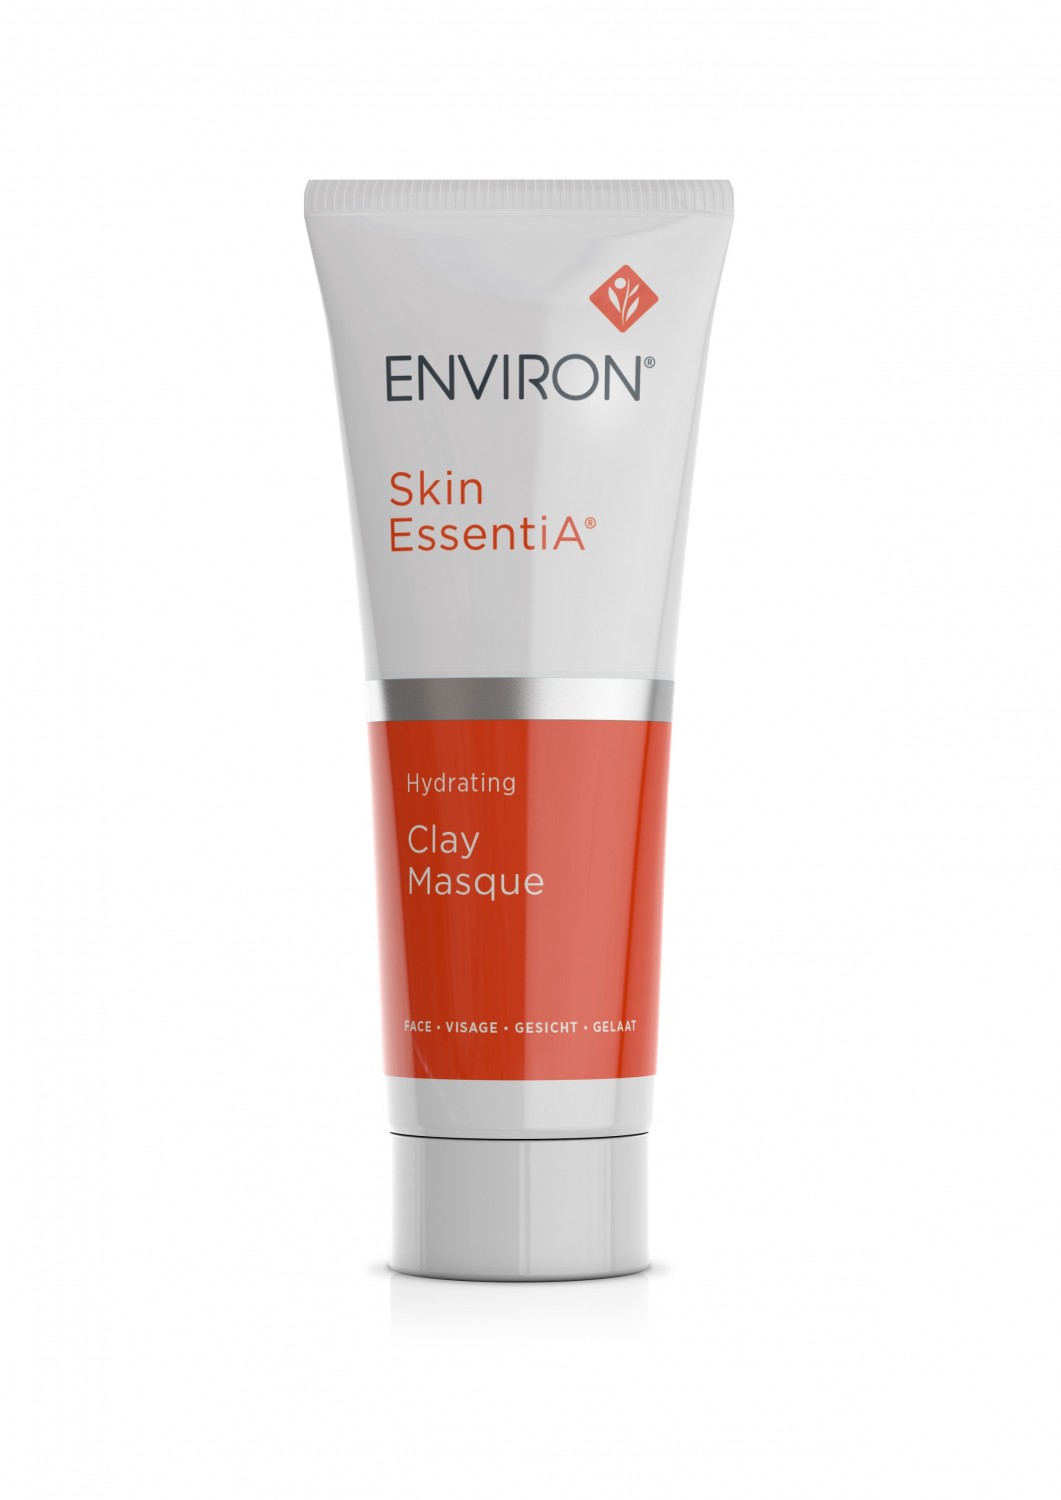 Environ Environ Skin EssentiA Hydrating Clay Masque | Vero Beauté